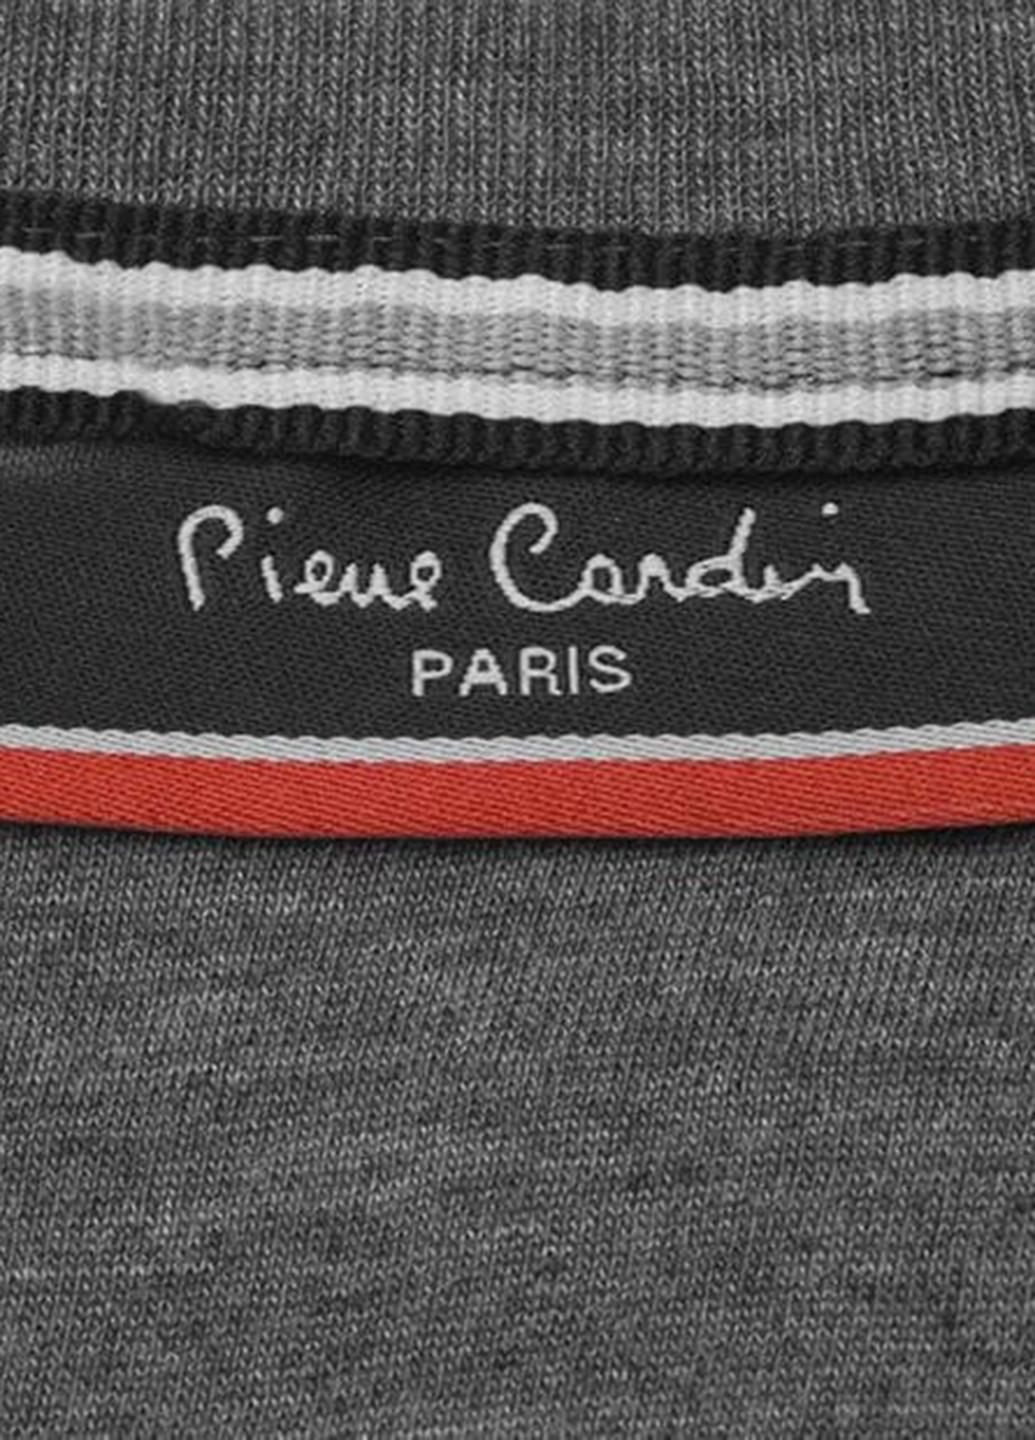 Серая футболка Pierre Cardin